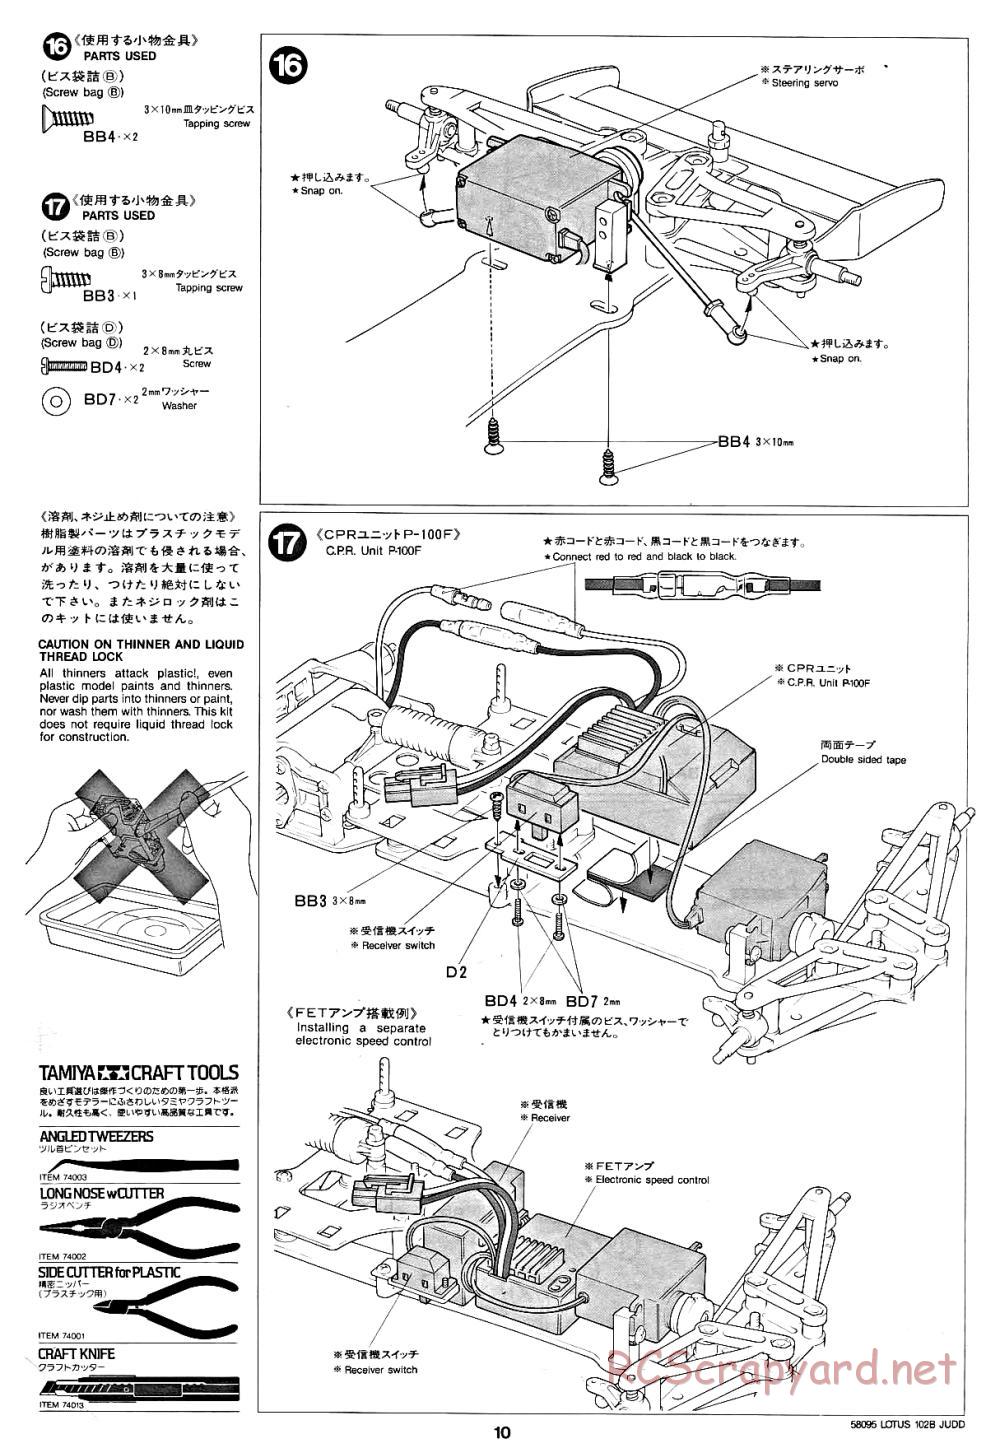 Tamiya - Lotus 102B Judd - 58095 - Manual - Page 10